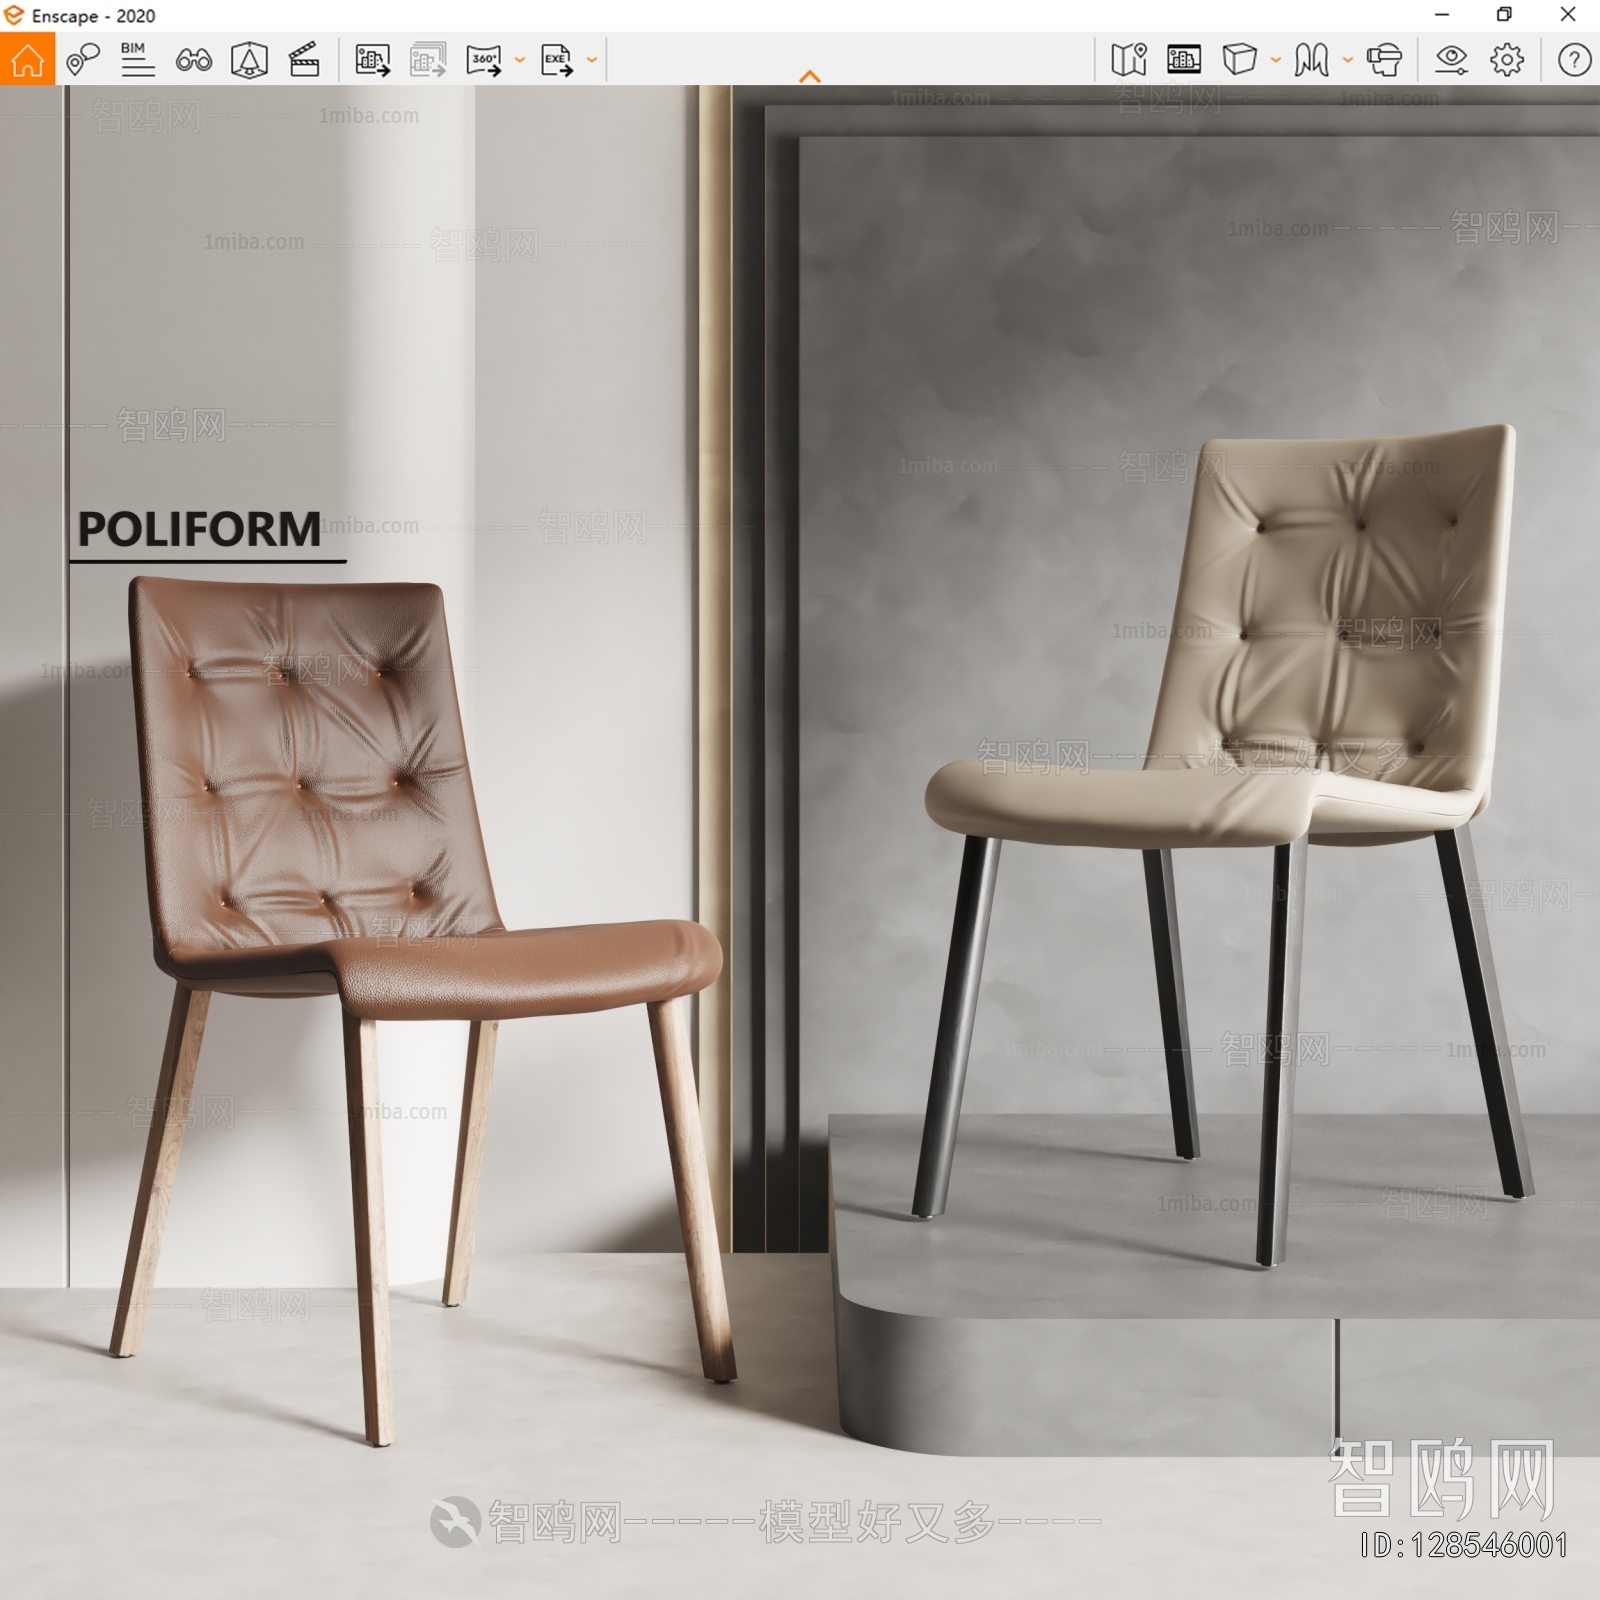 poliform现代皮革餐椅